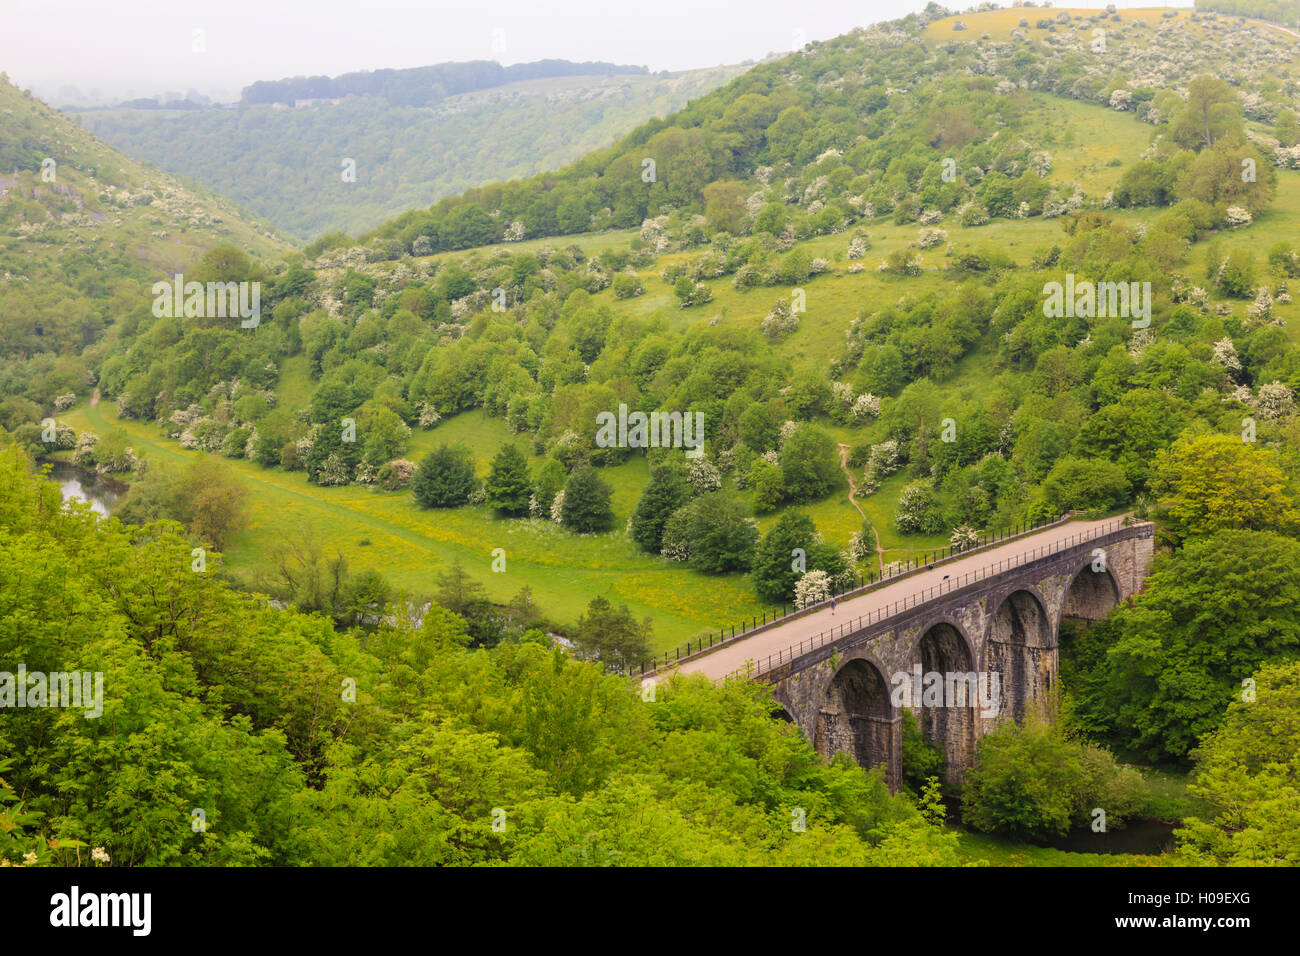 Monsal Trail-Viadukt, Monsal Kopf, Monsal Dale, ehemalige Bahnstrecke, Bäume in voller Blatt im Sommer, Peak District, Derbyshire, UK Stockfoto